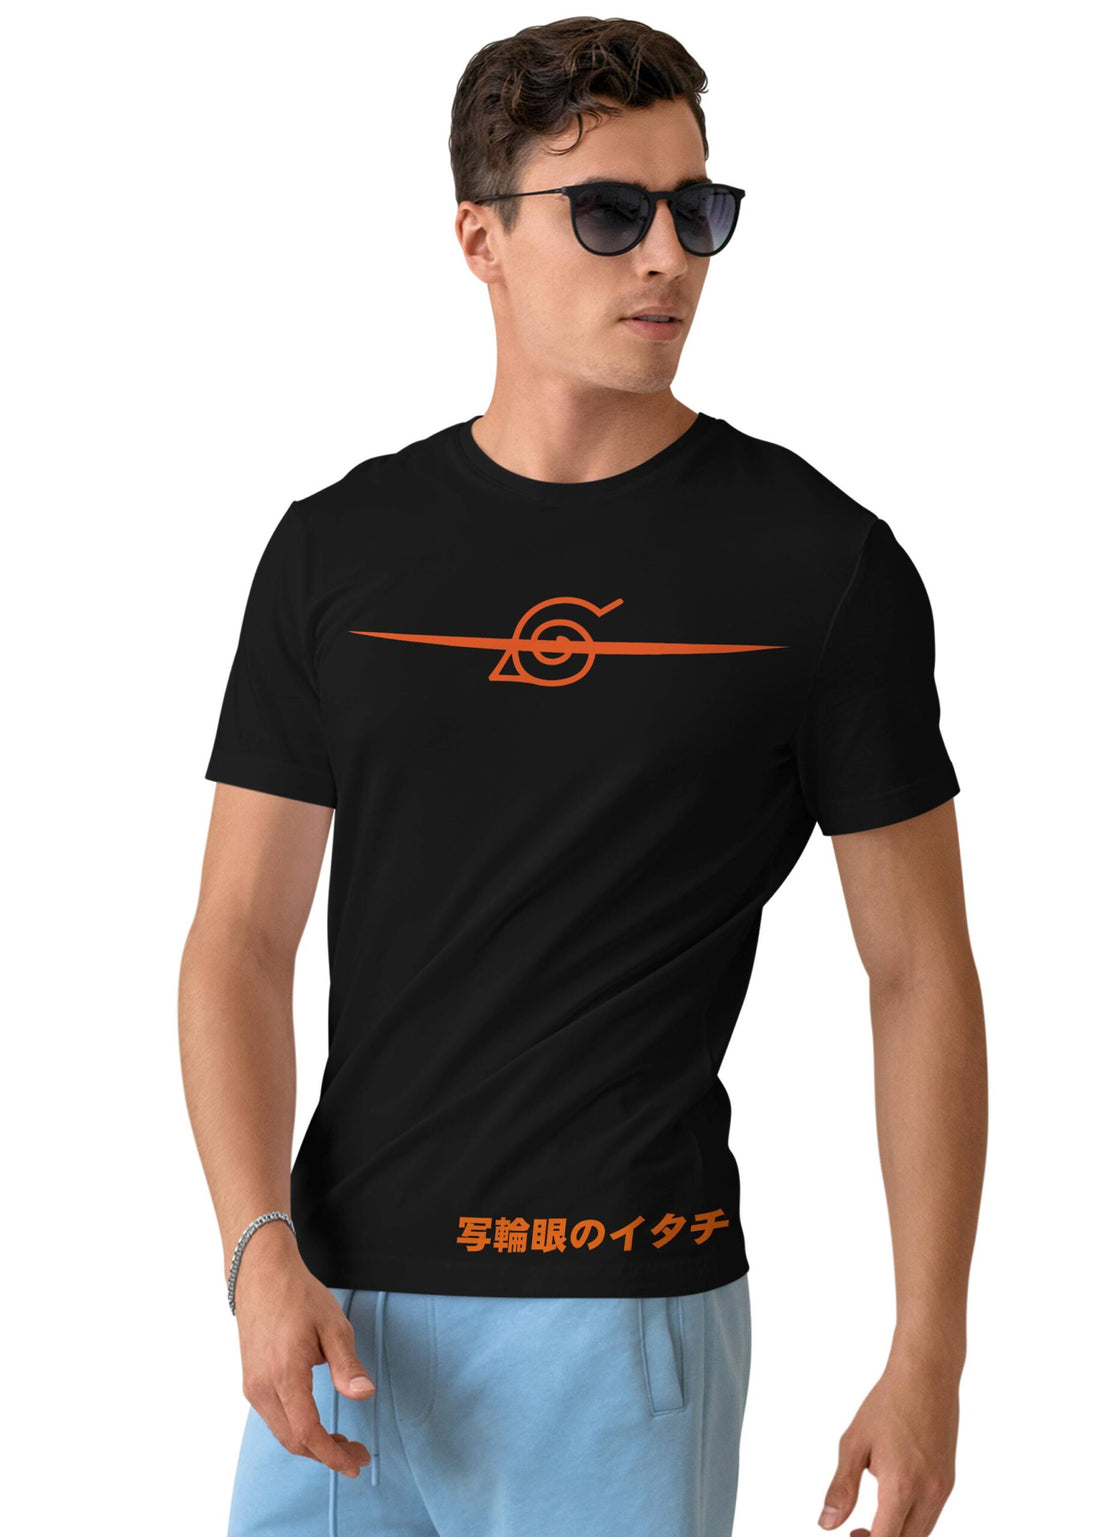 Itachi of the Sharingan - Neon Print Half Sleeve T-Shirt